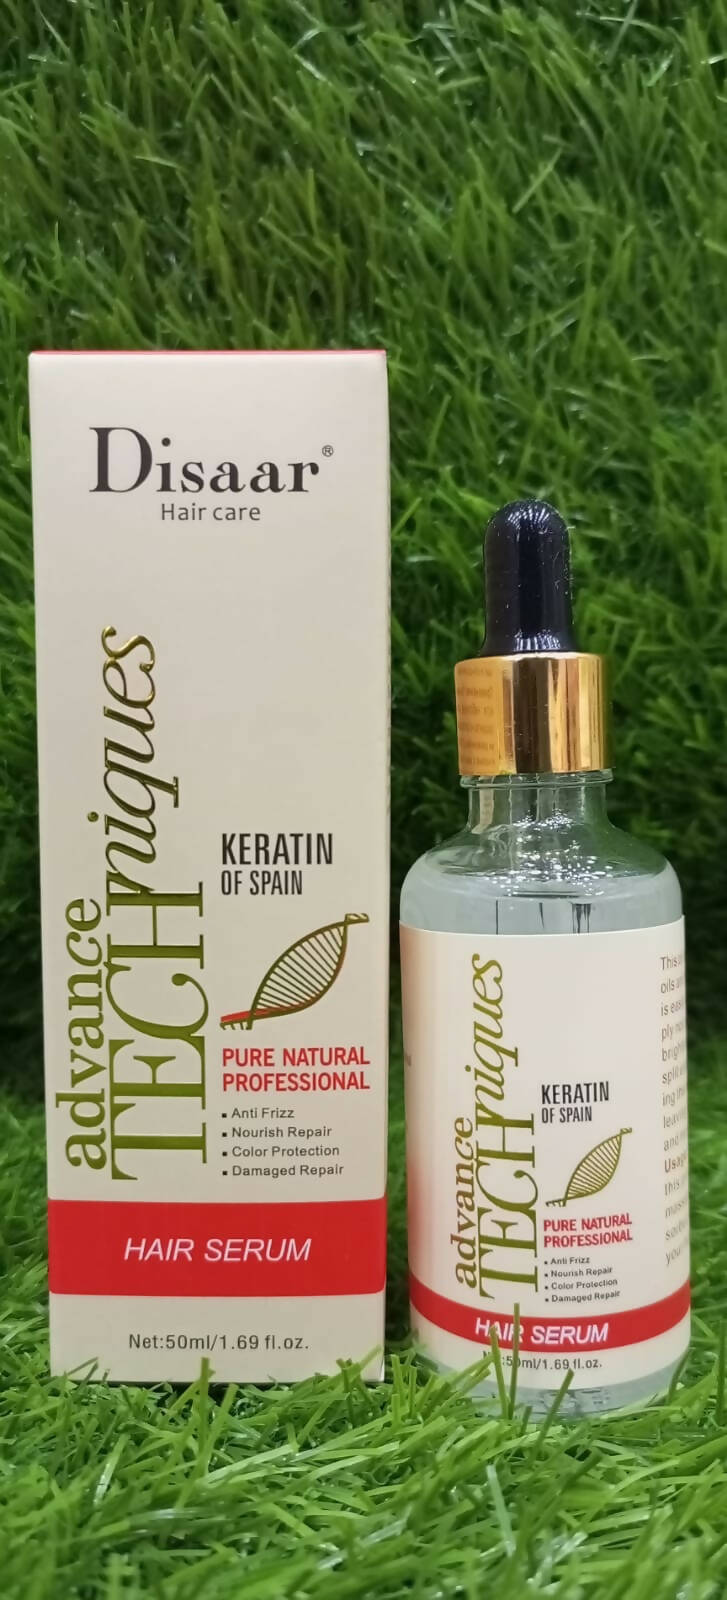 Disar Hair Care Advance Techniques Keratin Of Spain